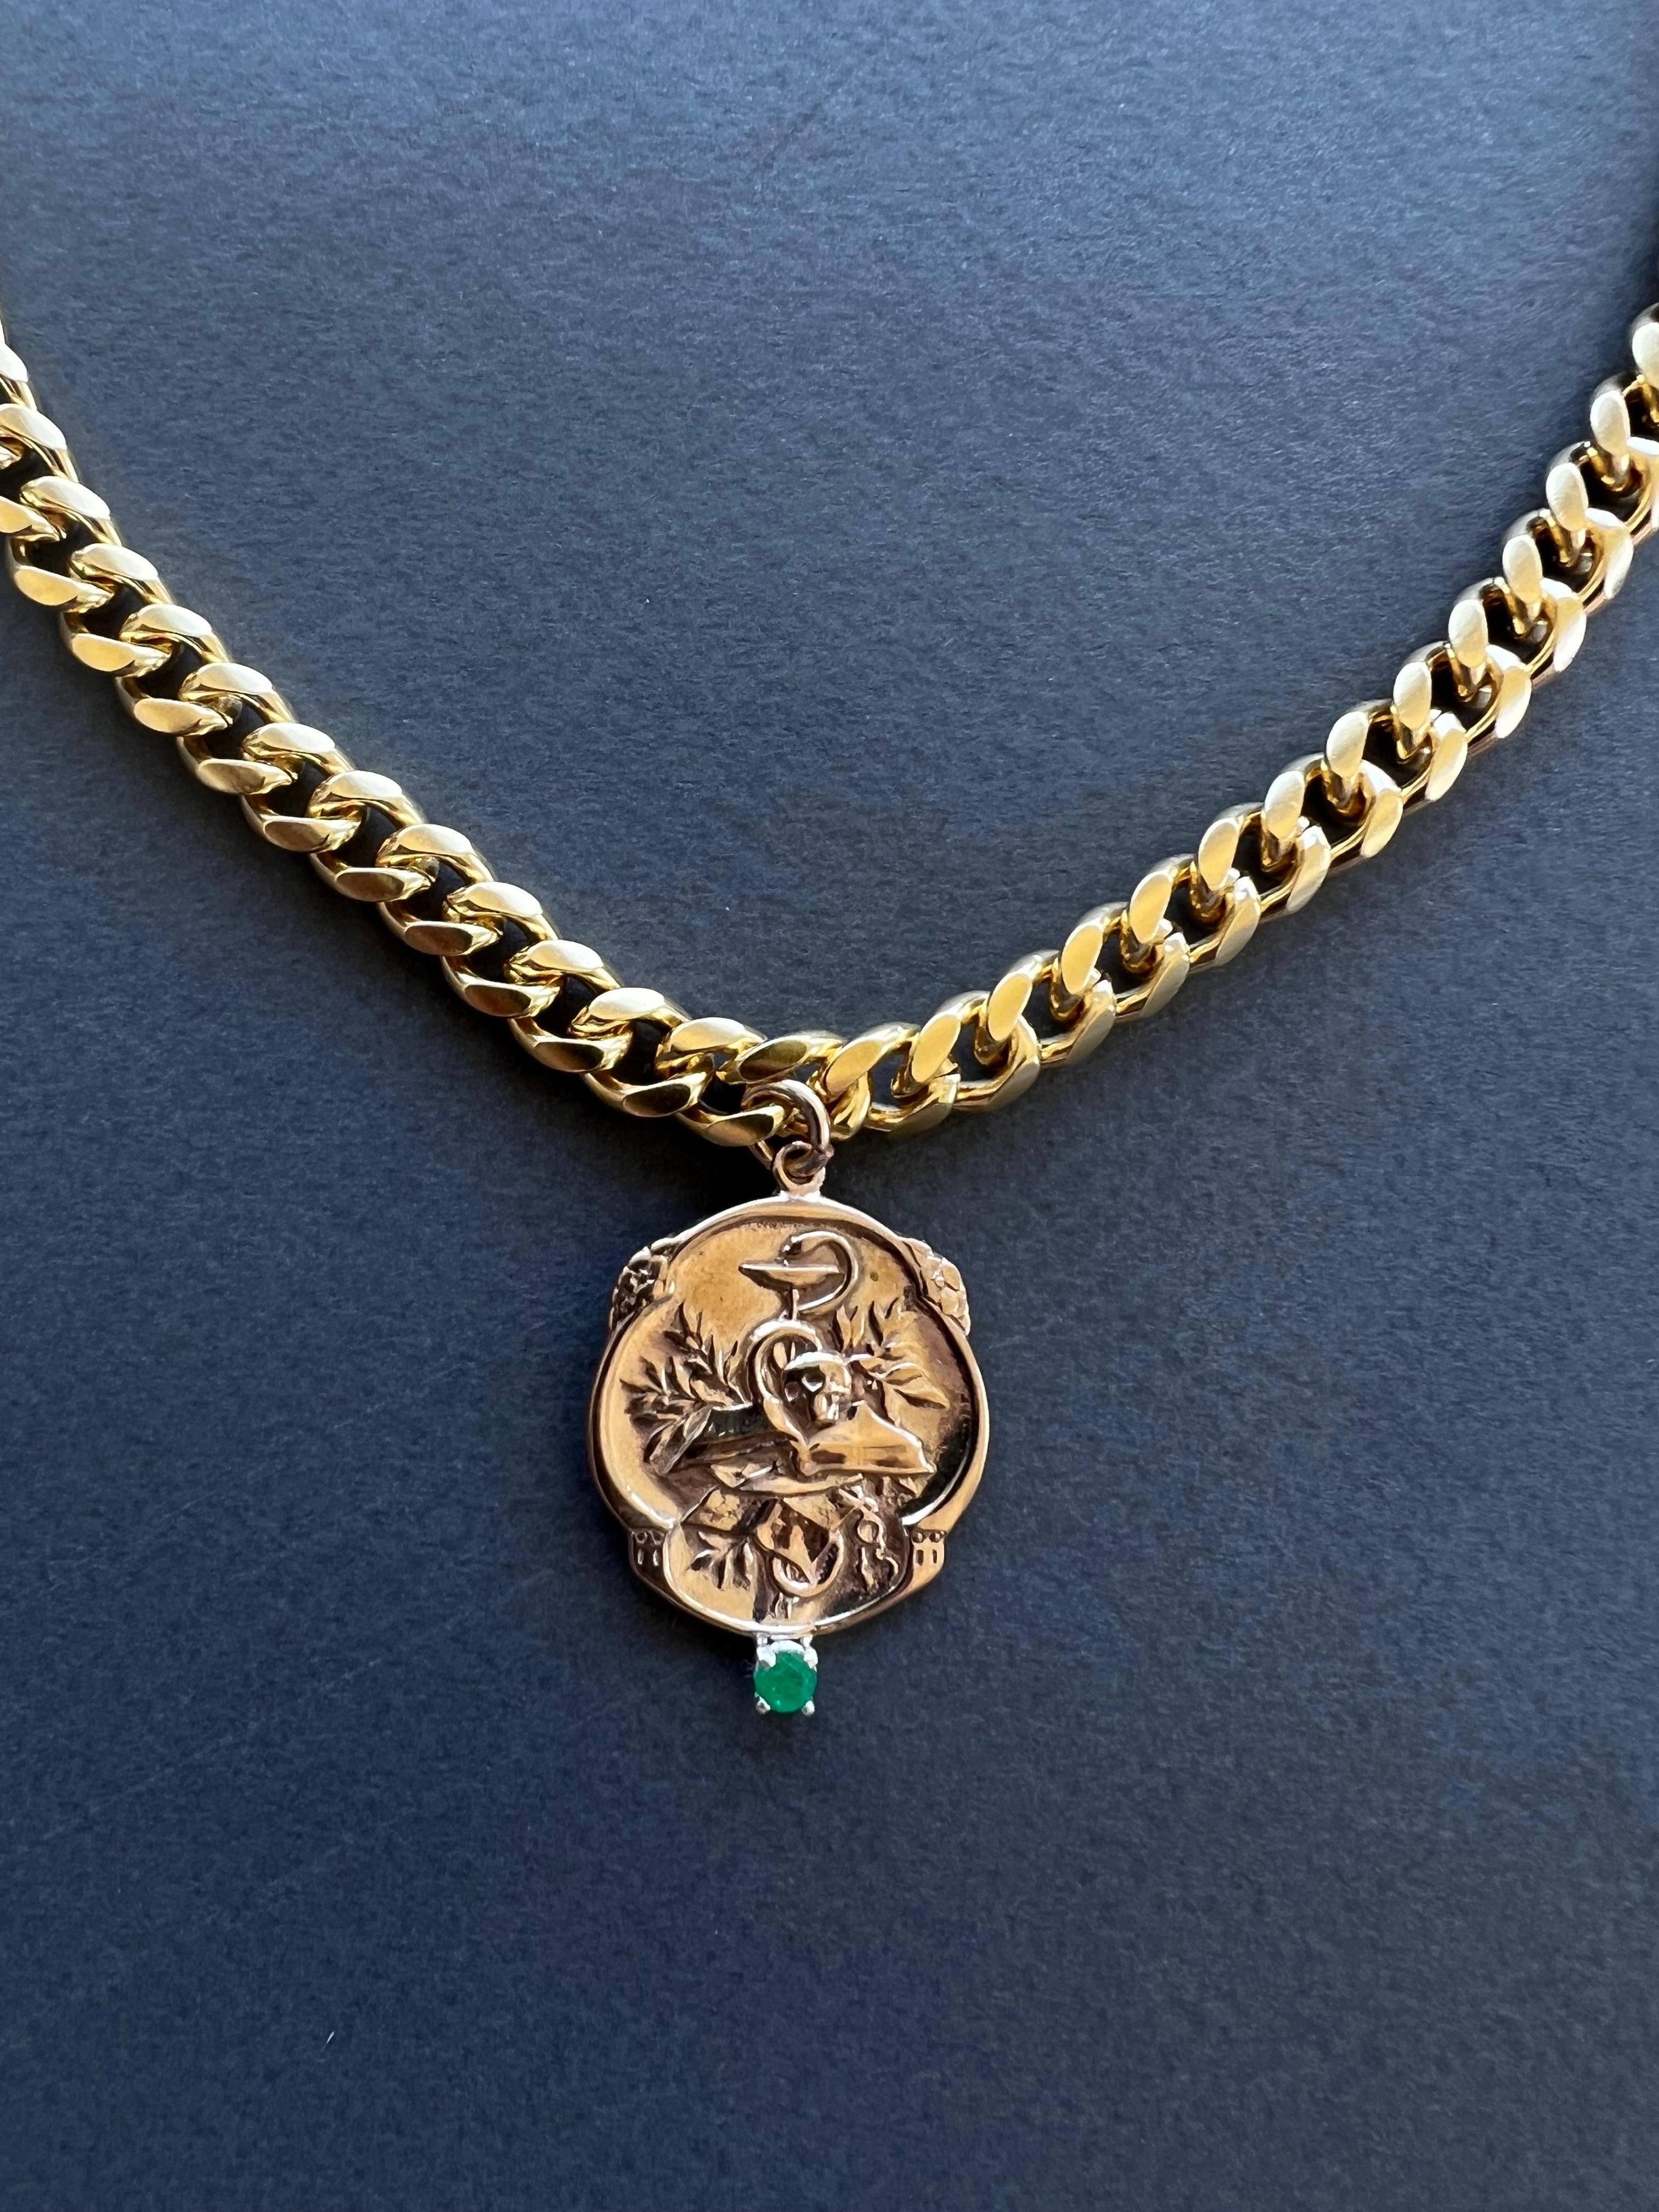 Brilliant Cut Emerald Victorian Style Memento Mori Medal Choker Chain Necklace Skull J Dauphin For Sale